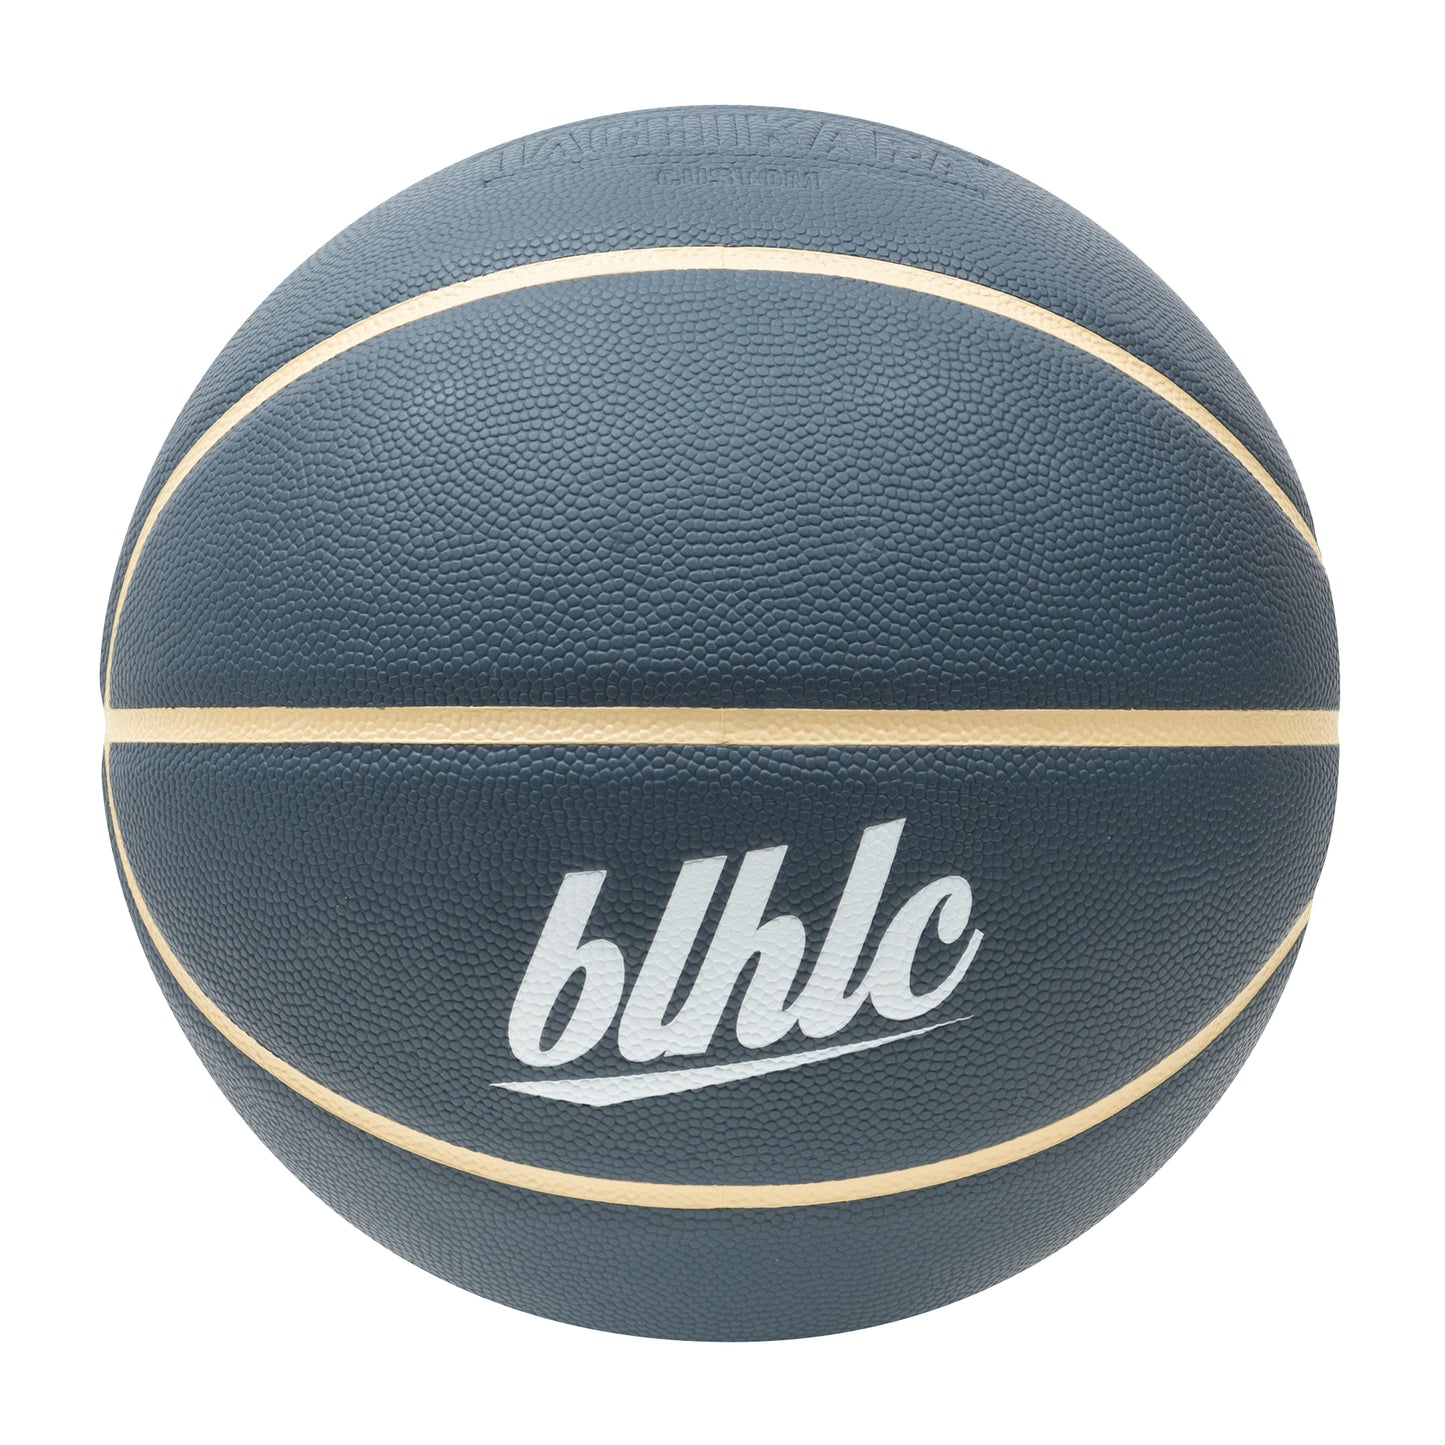 Playground Basketball / ballaholic x TACHIKARA (slate blue/cream beige) 7